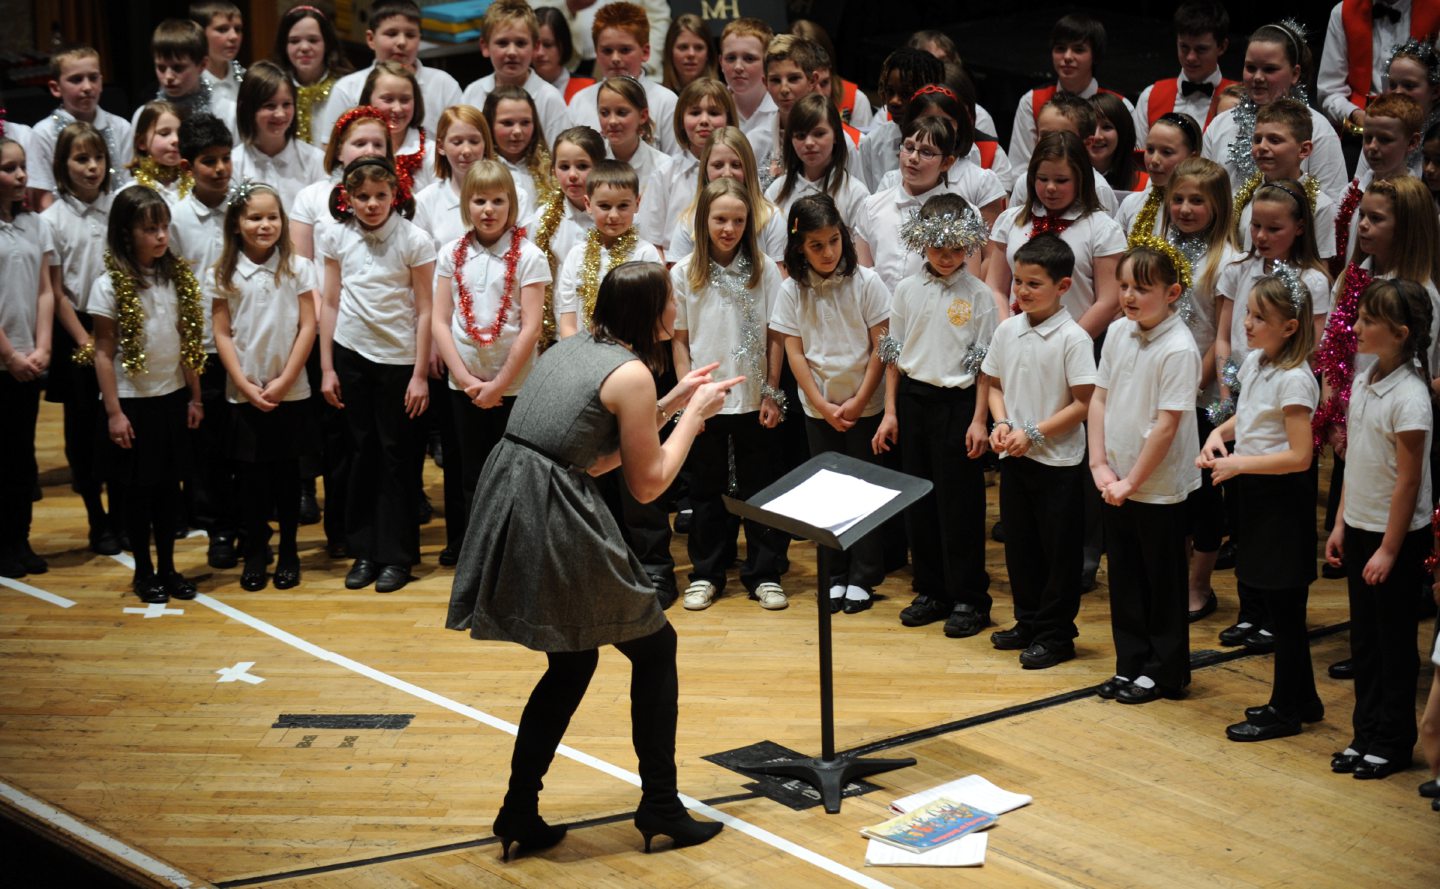 Portlethen Primary School choir directed by Lorna Baker